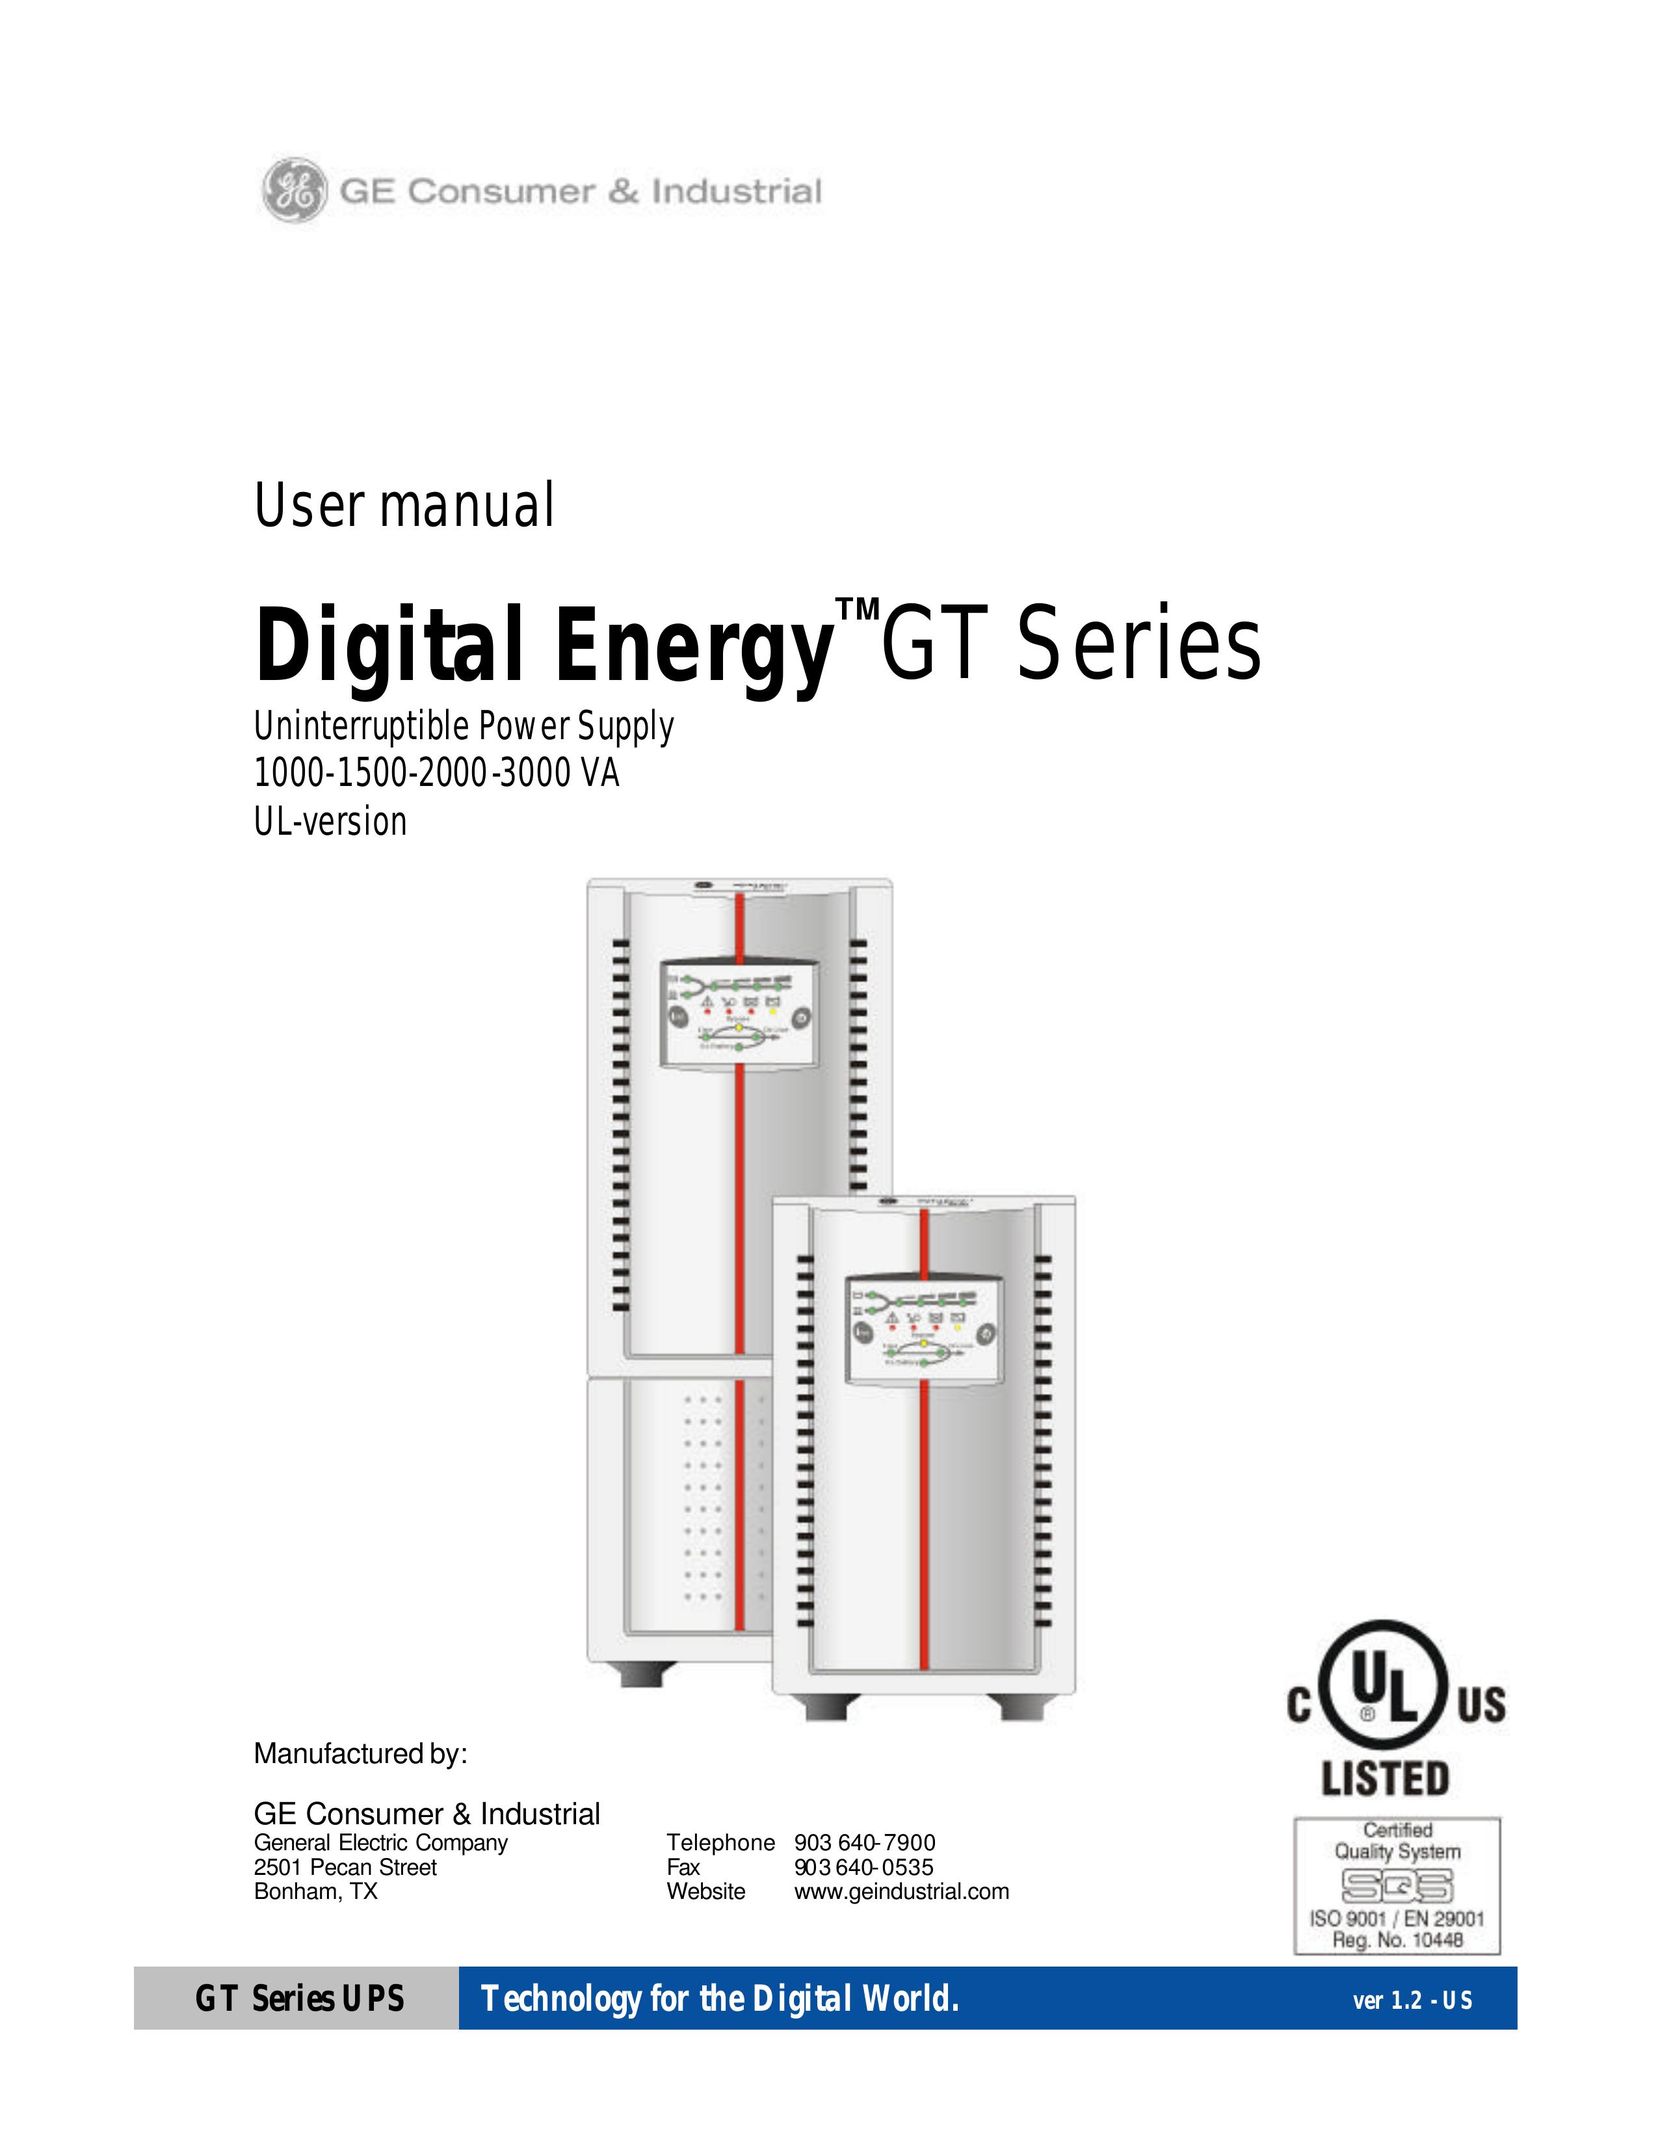 GE 1000-1500-2000-3000 VA Power Supply User Manual